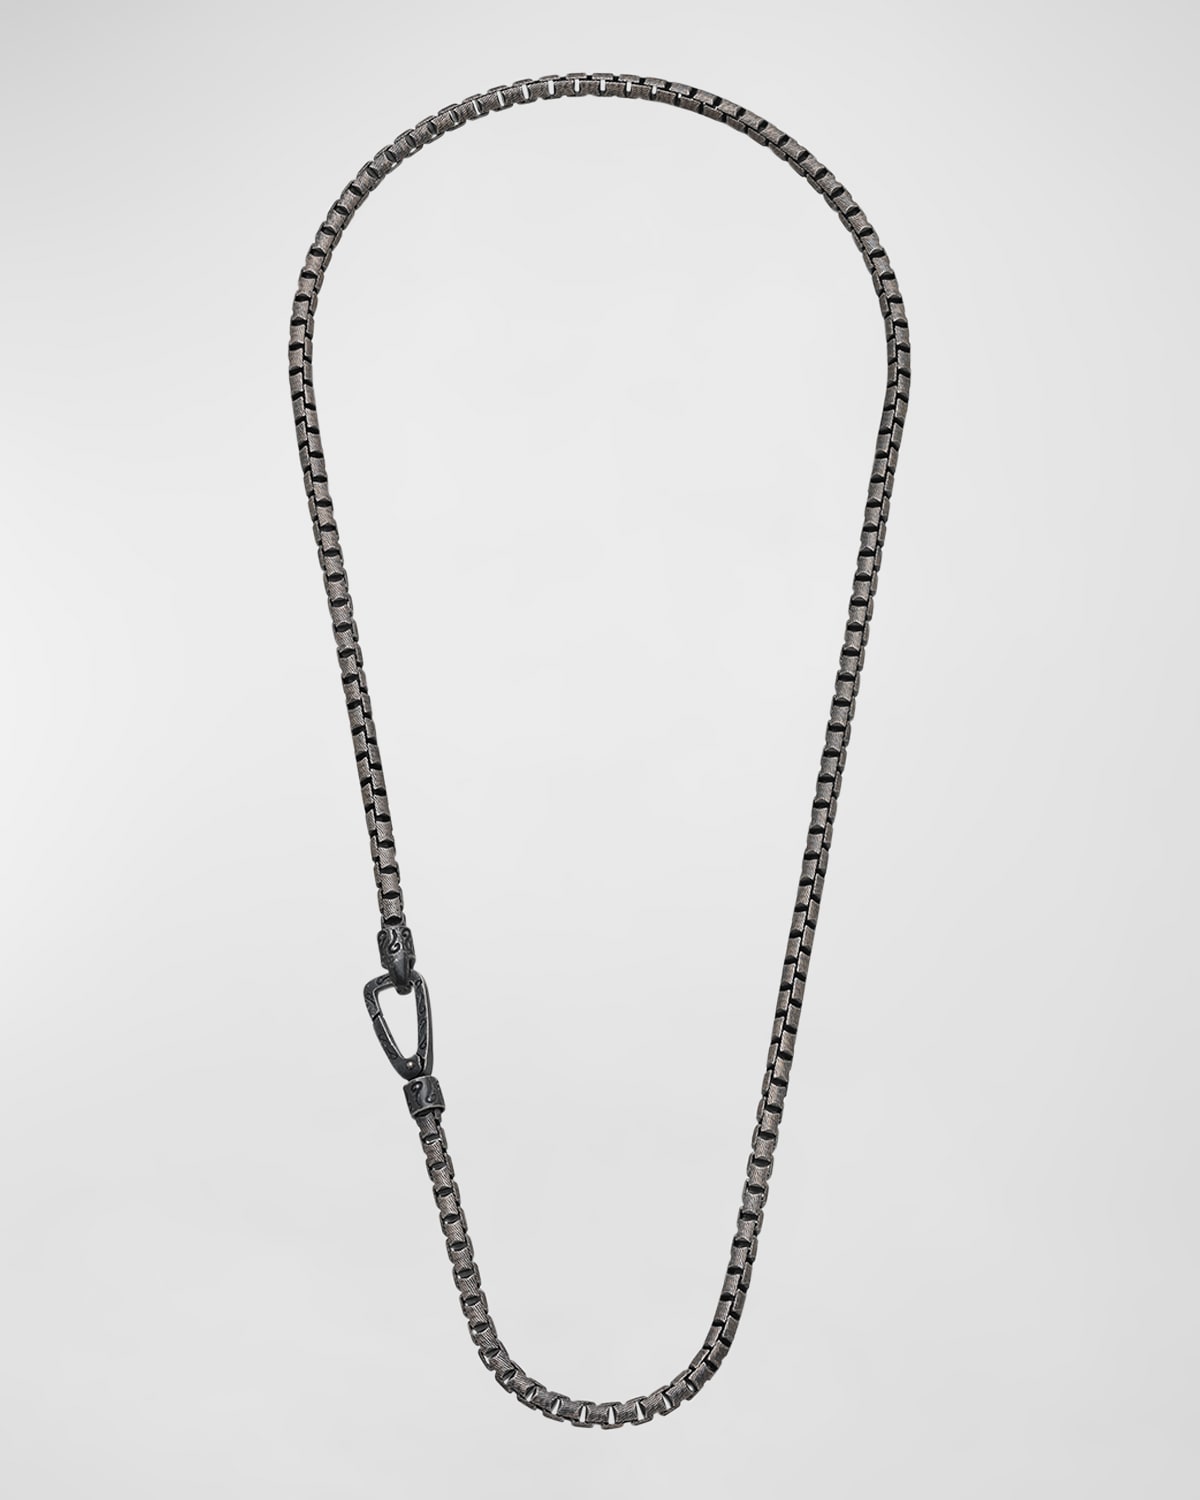 Marco Dal Maso Carved Tubular Oxidized Silver Necklace, 20"L